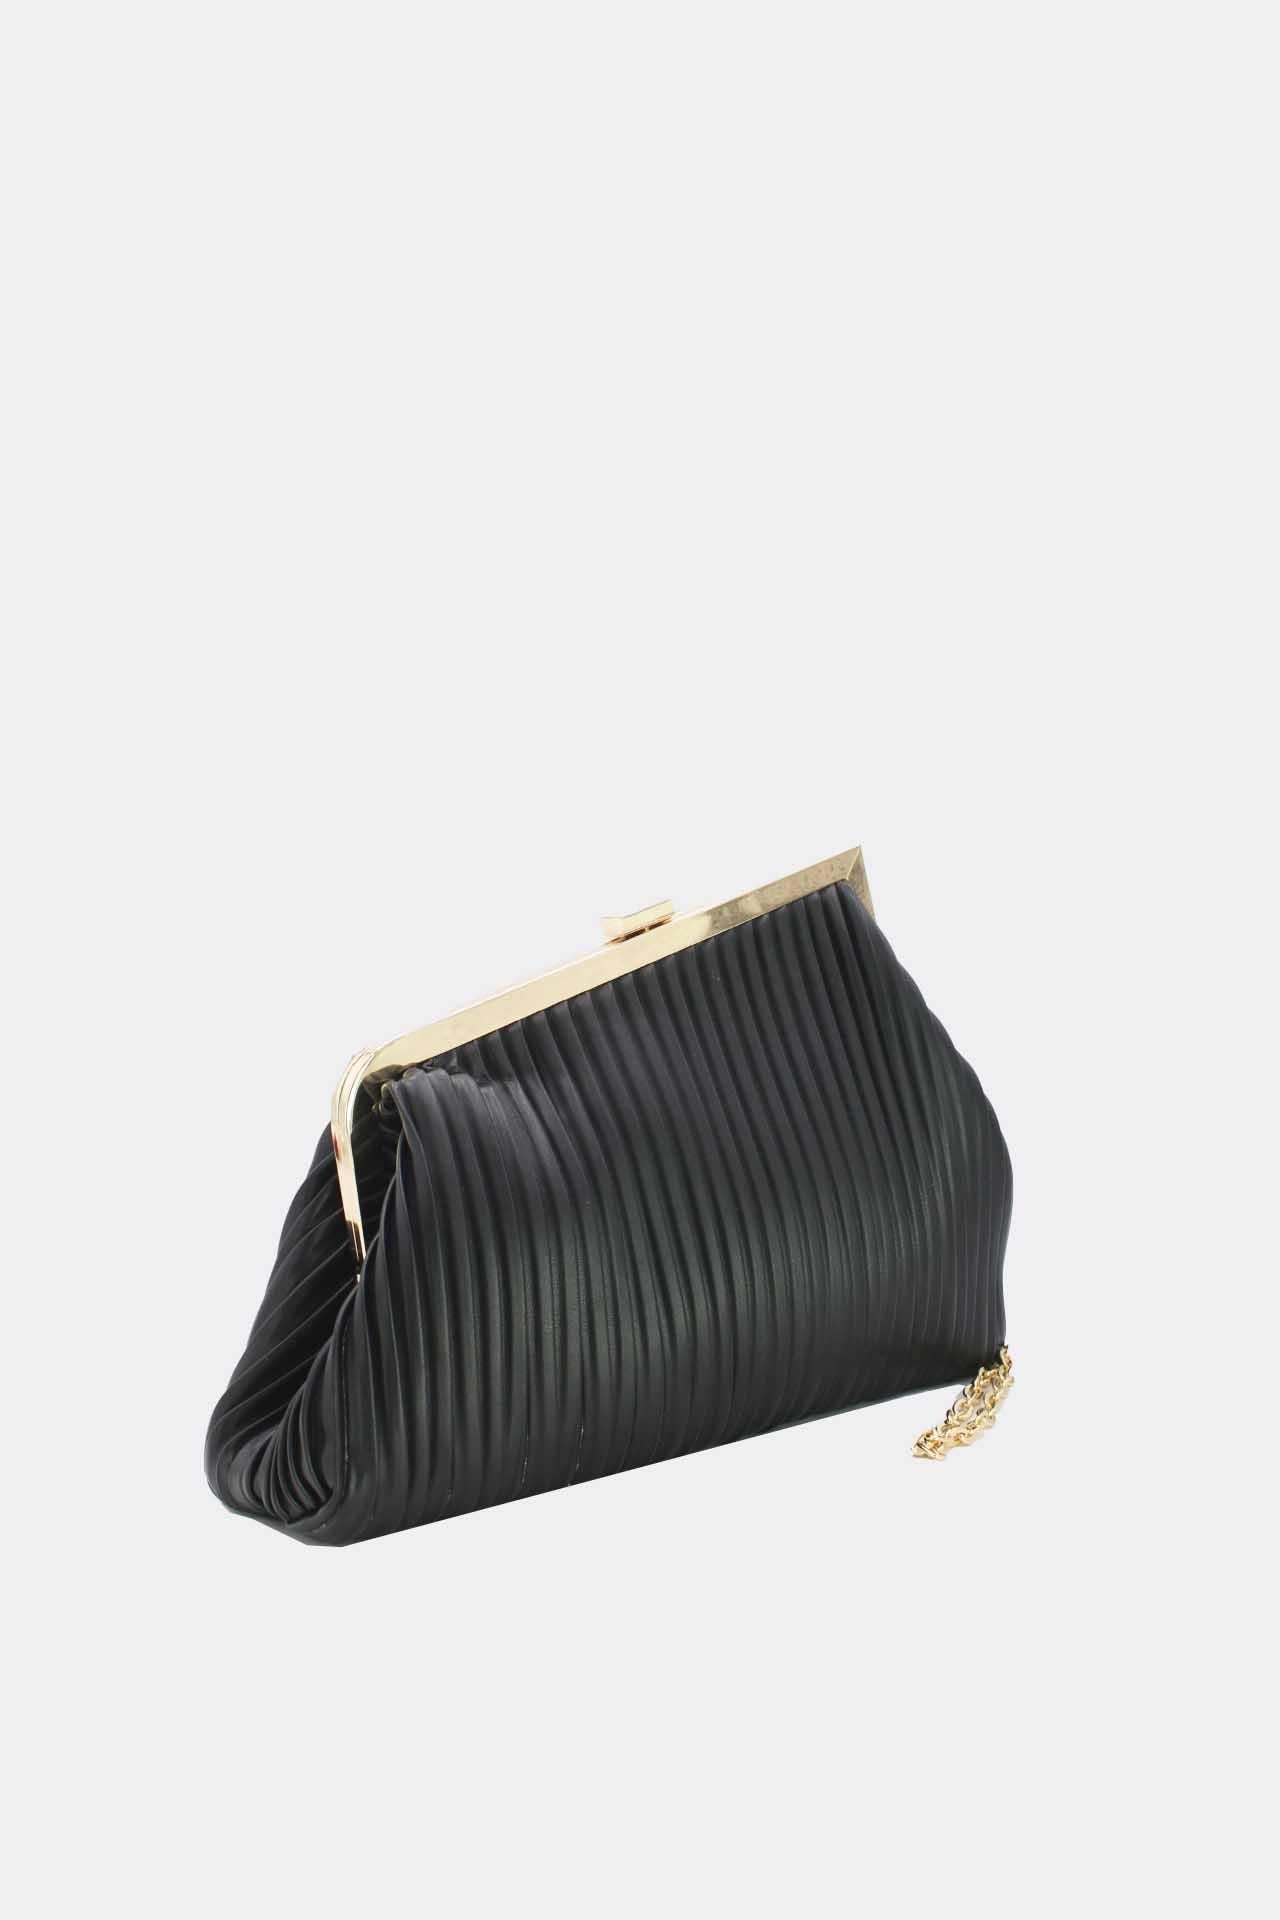 Luxury black clutch handbag